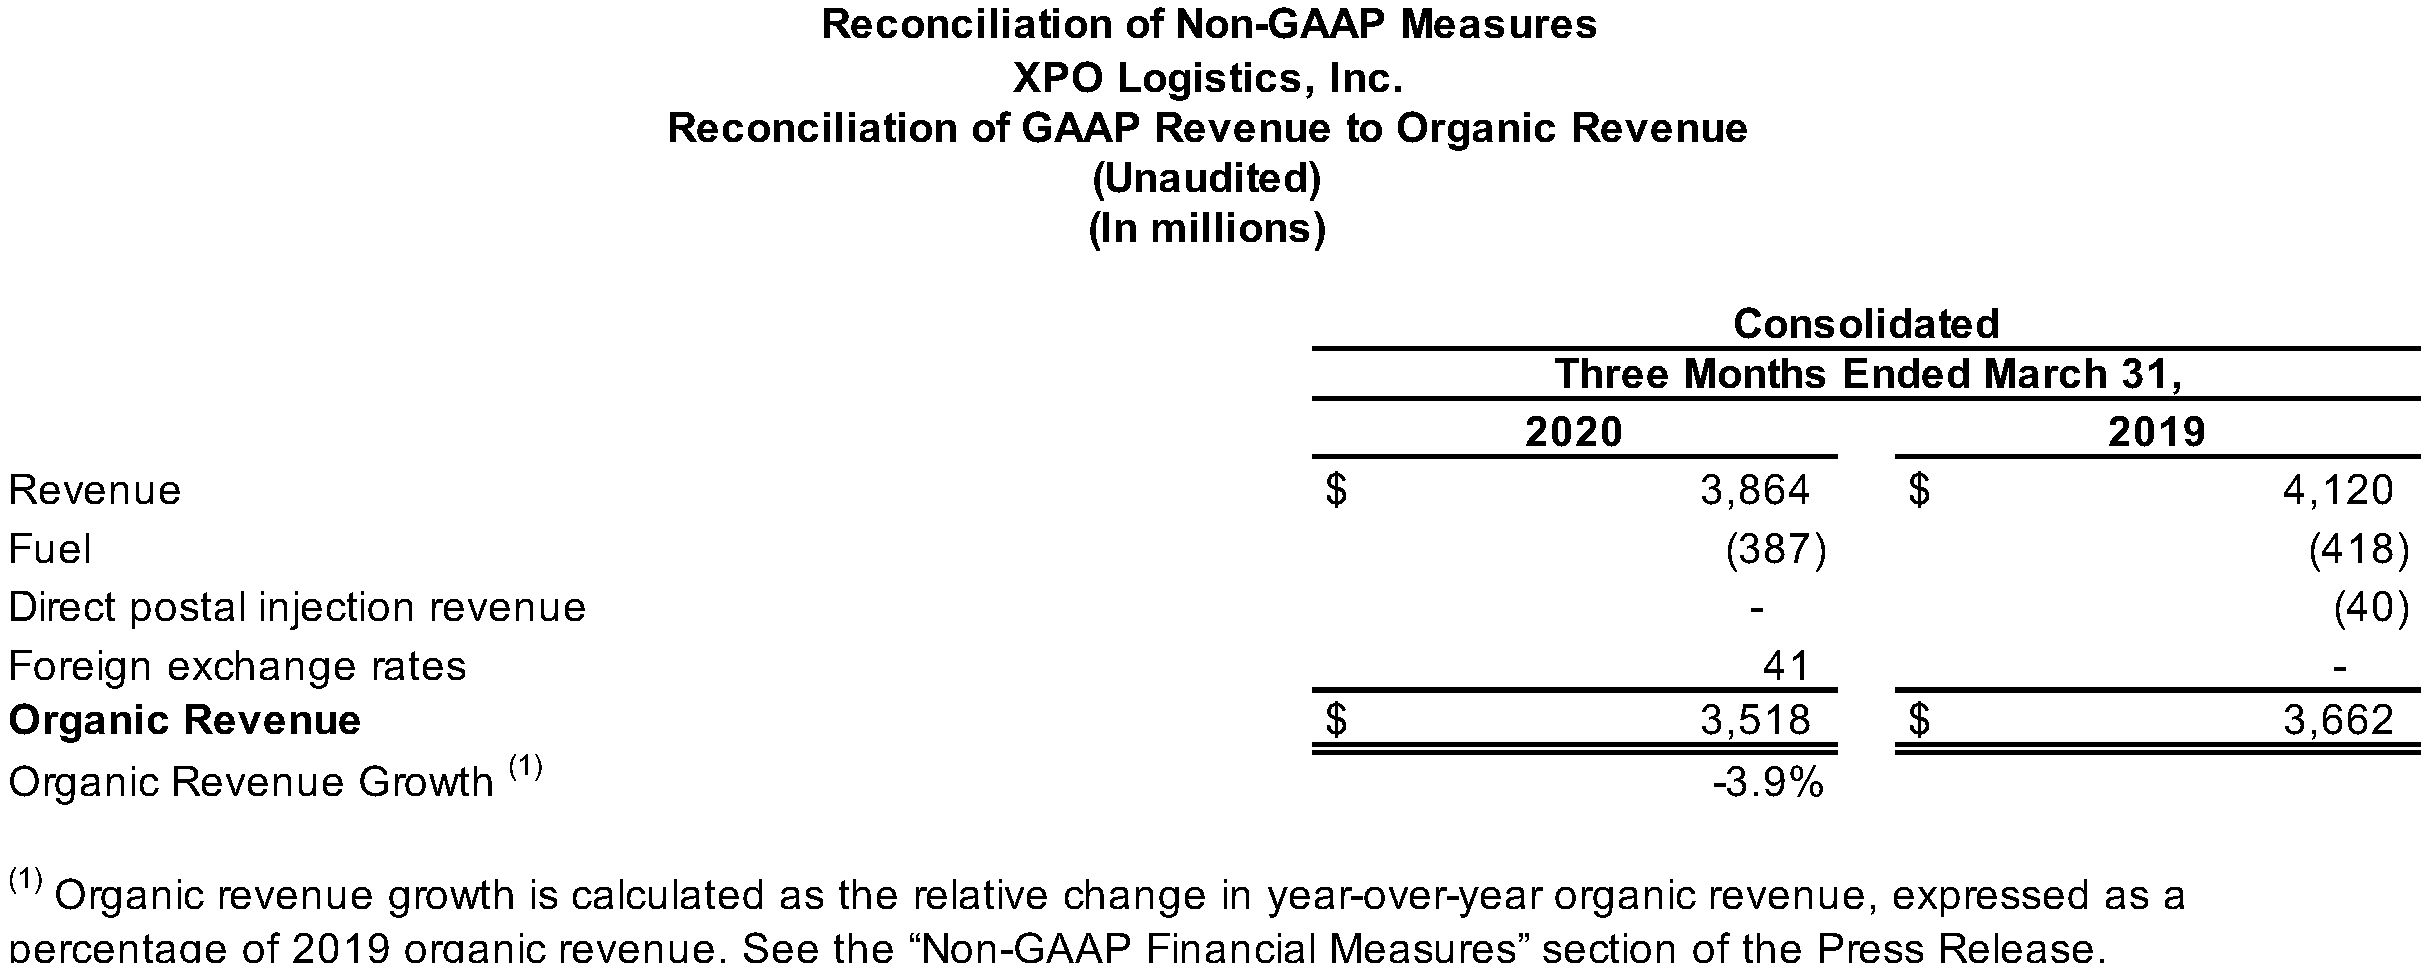 Reconciliation of GAAP Revenue to Organic Revenue